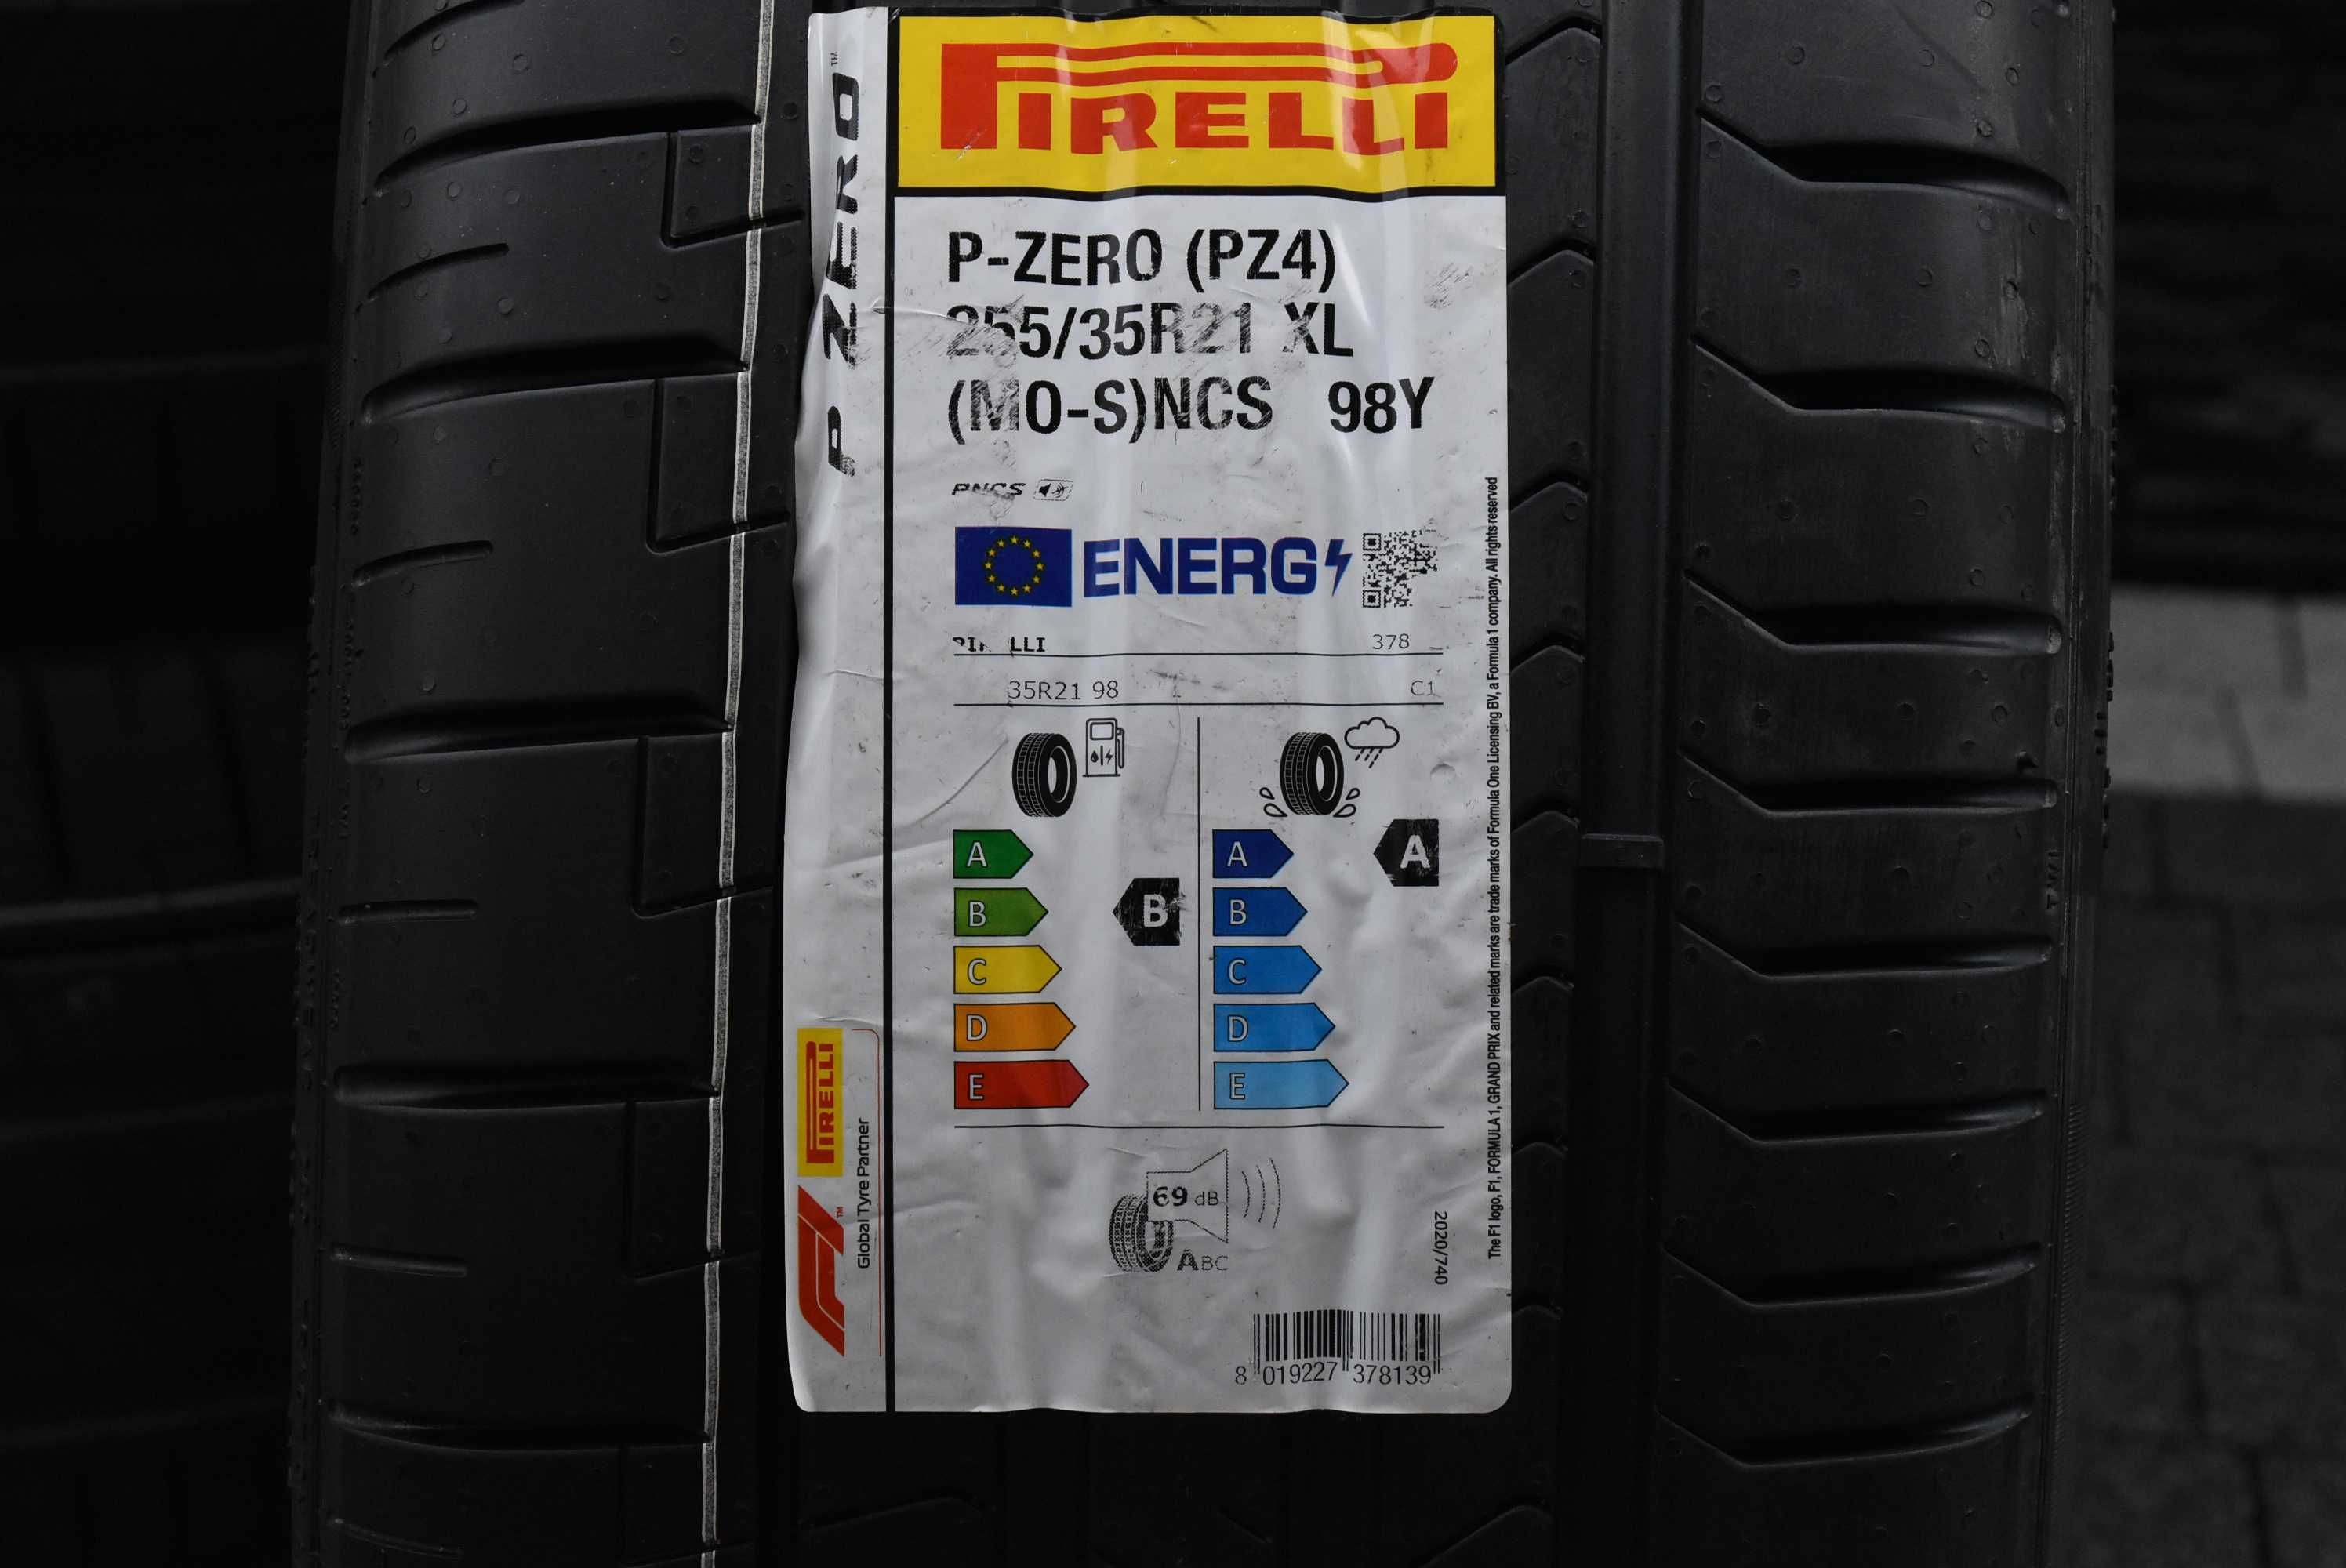 NOWE Pirelli 
P ZERO PZ4 S.C. XL FR PNCS AO/MO
255/35R21 98Y dot2024